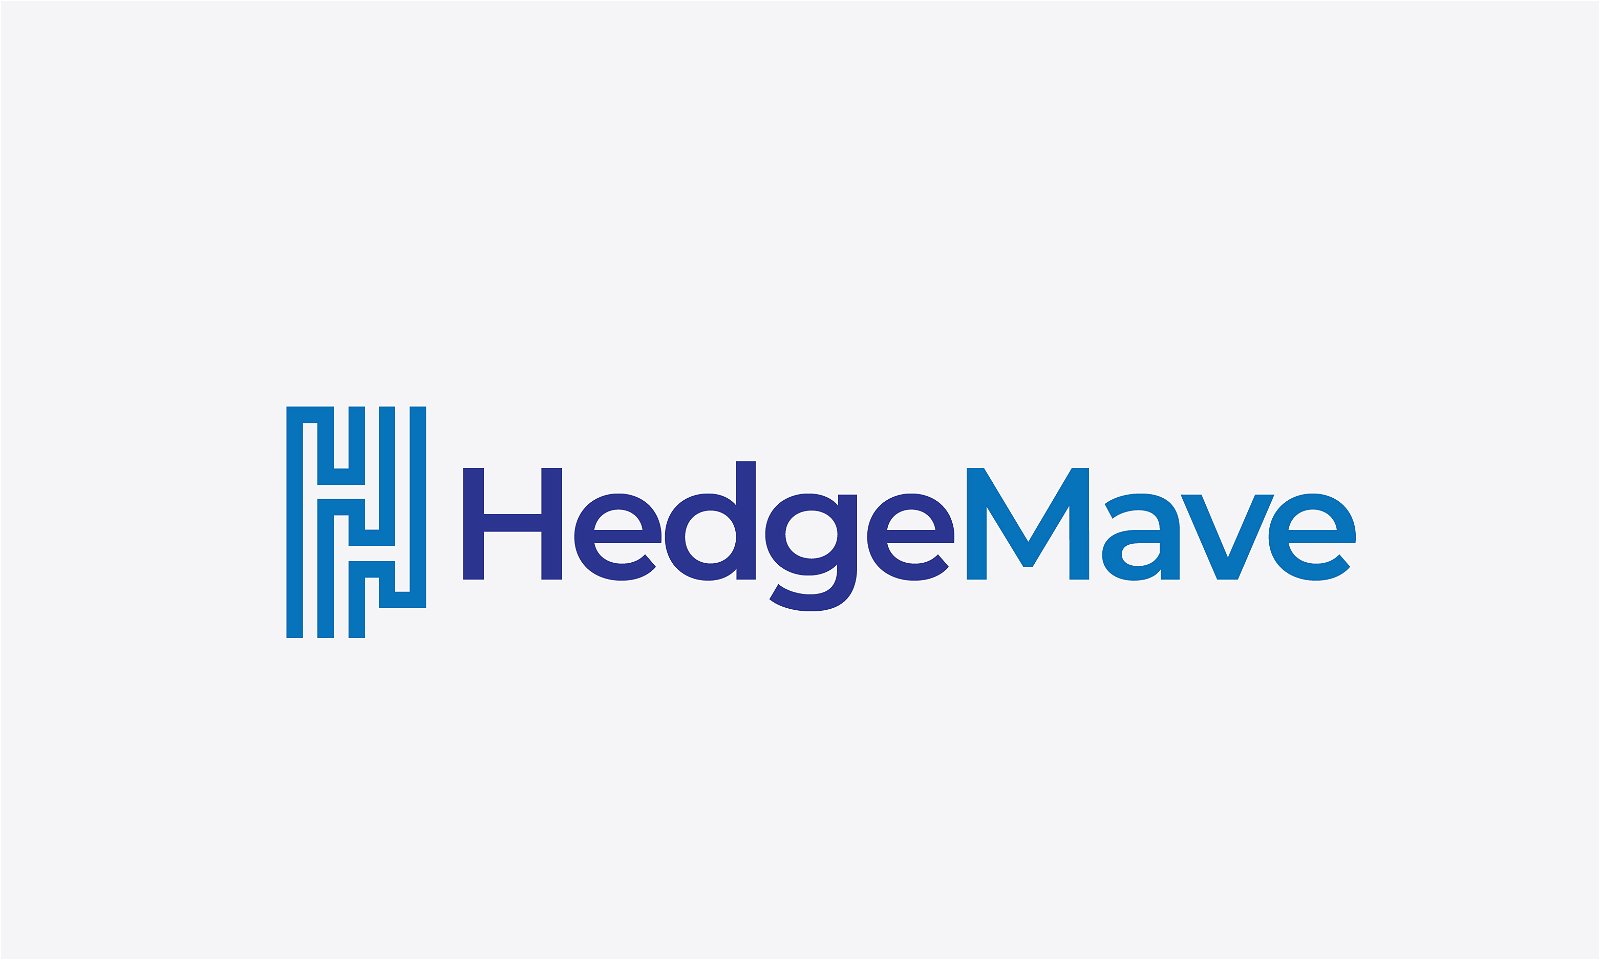 HedgeMave.com - Creative brandable domain for sale